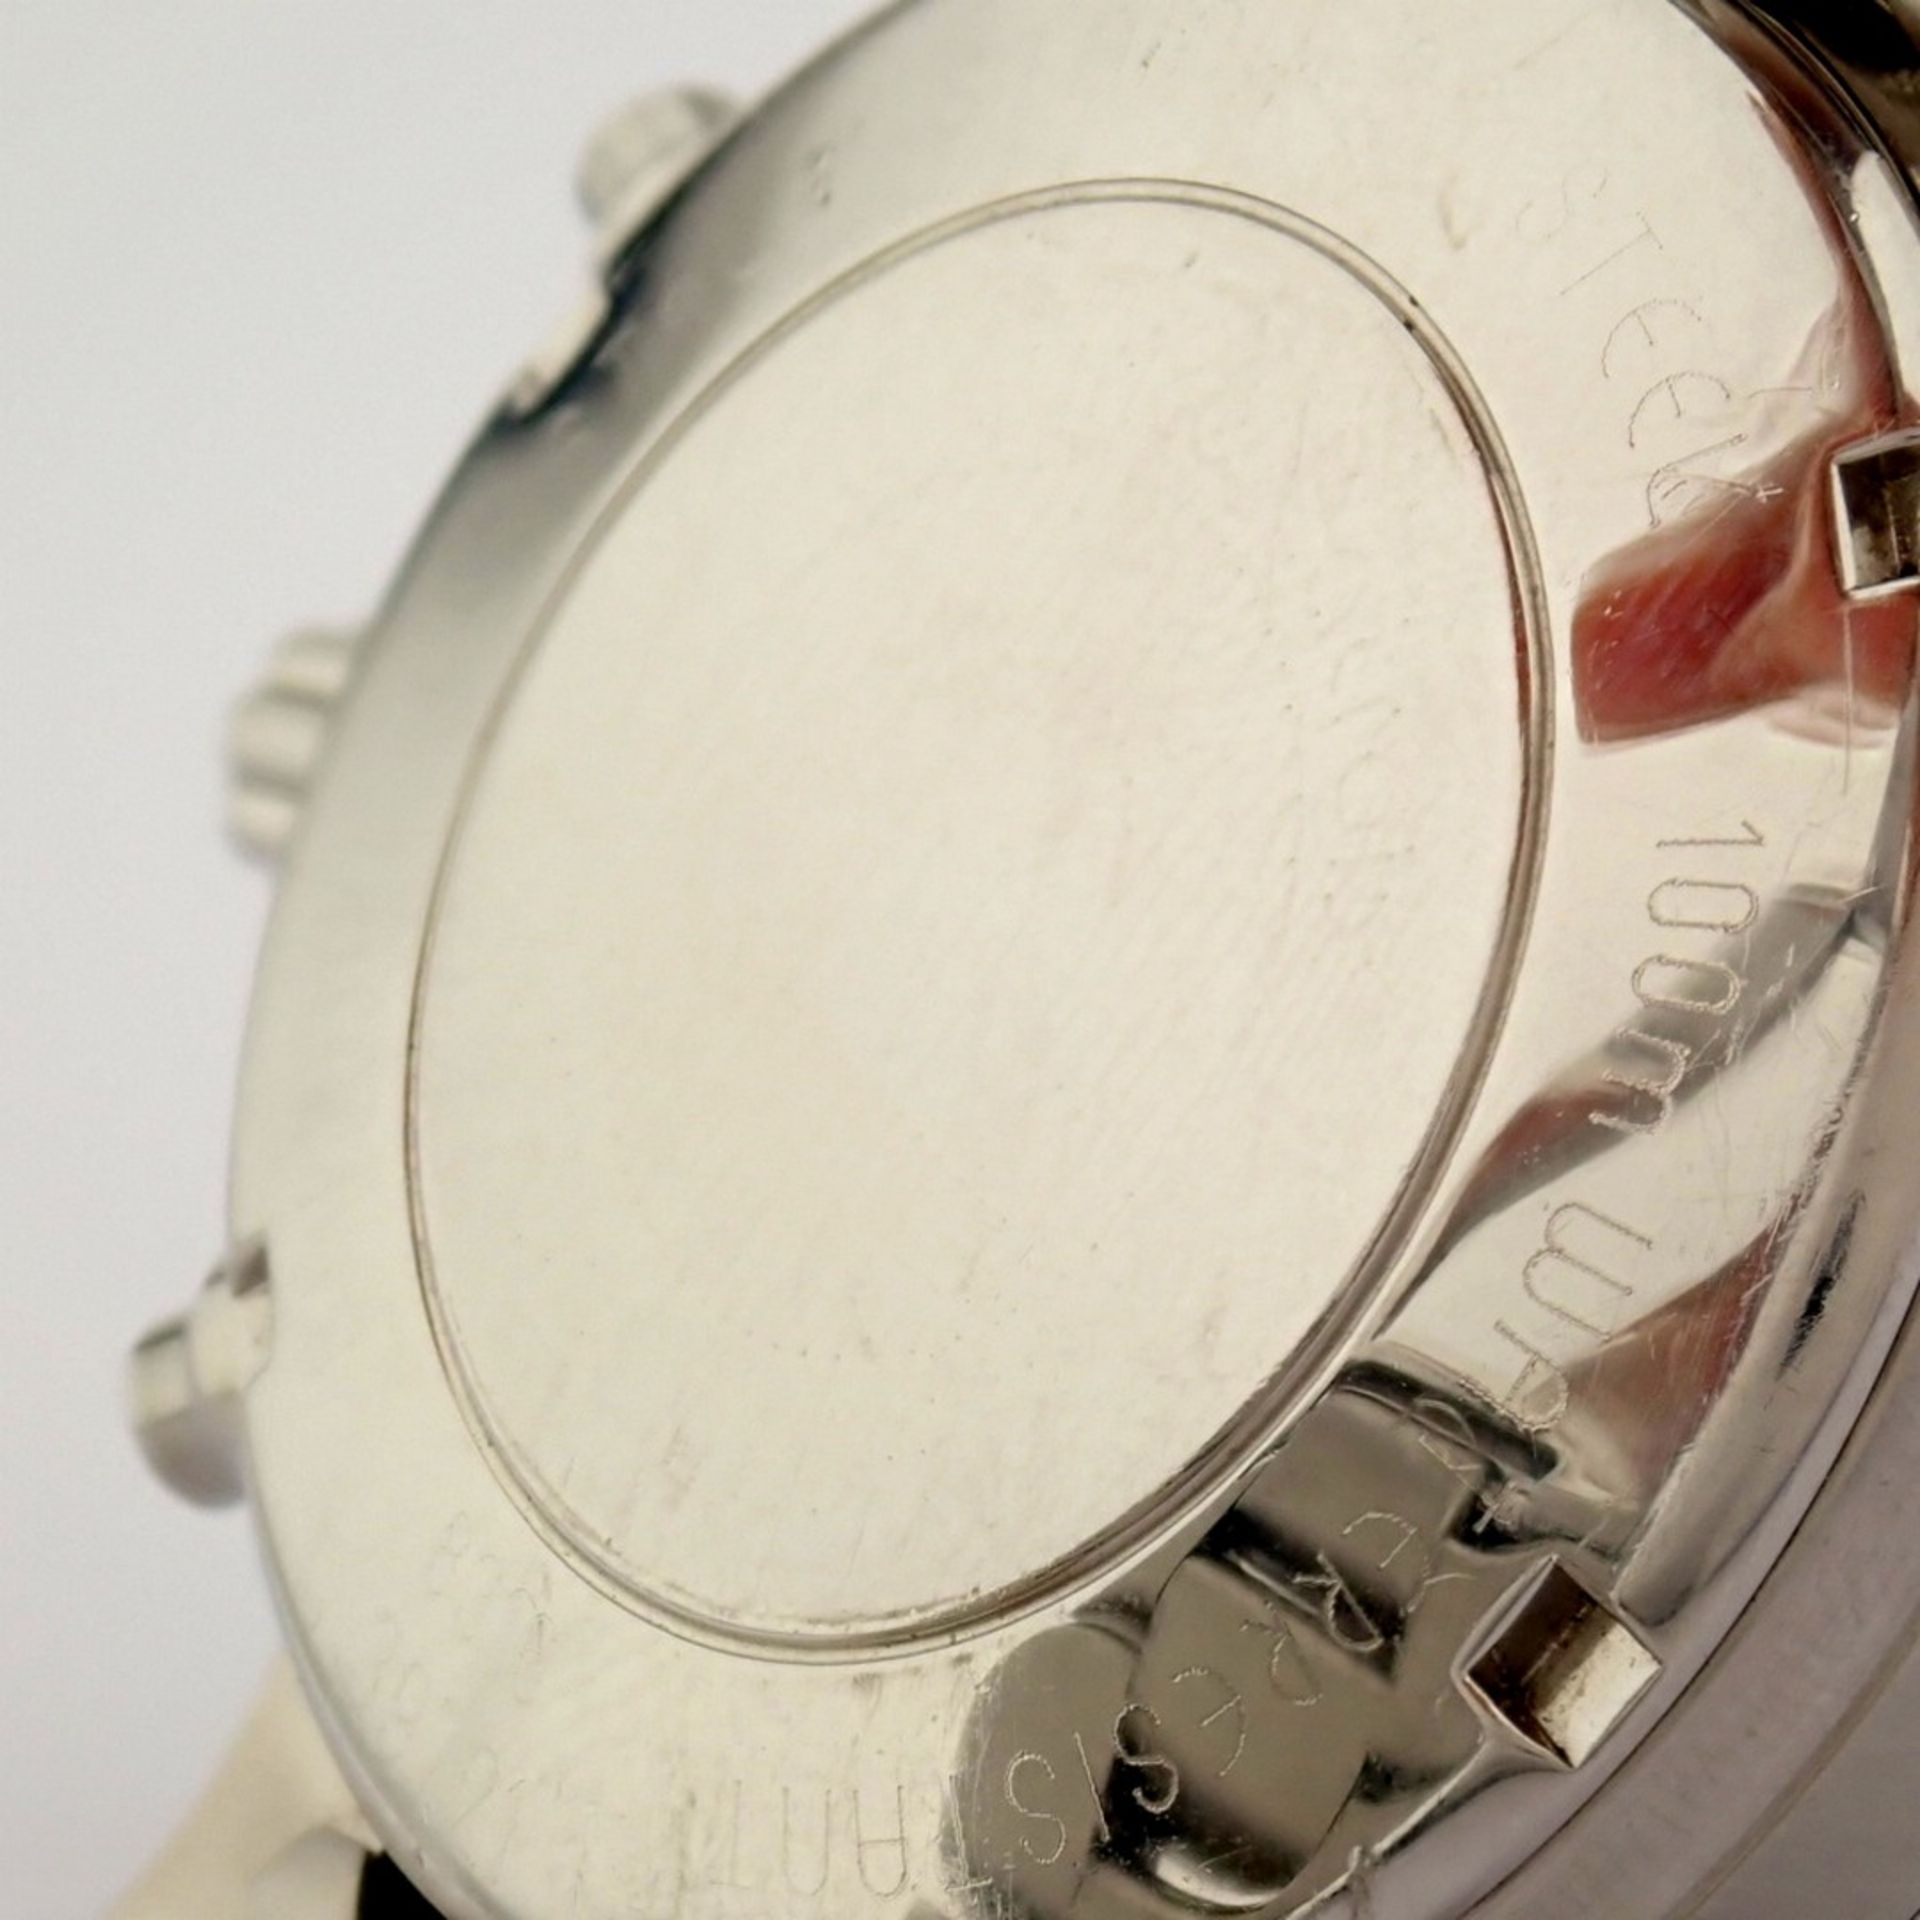 Maurice Lacroix / 39721 Automatic Chronograph - Gentlmen's Steel Wrist Watch - Image 14 of 19